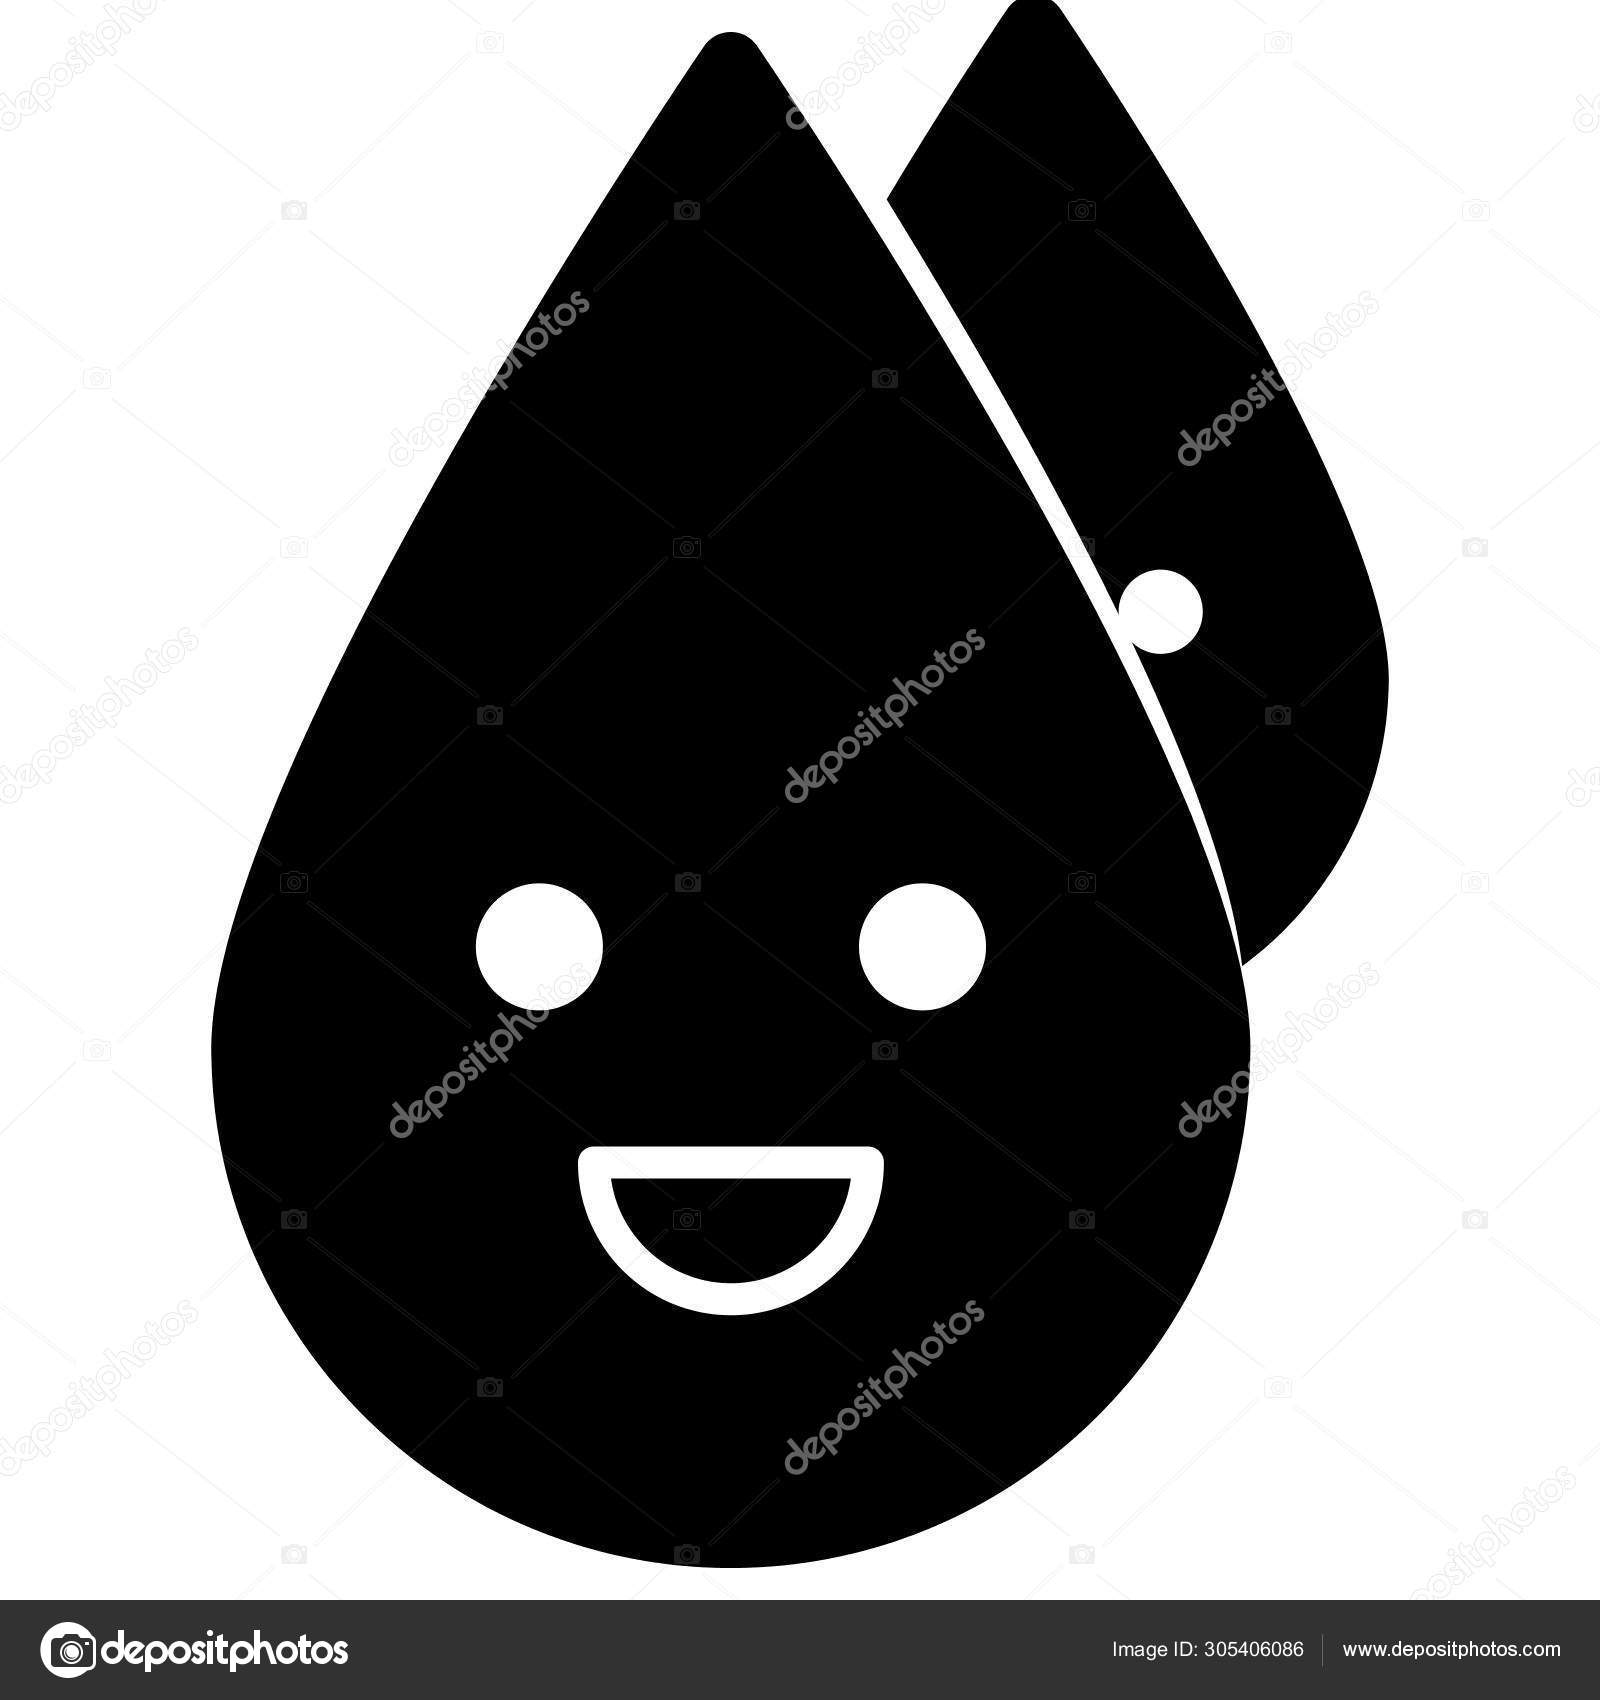 Water Drops Emoji Vector Images Royalty Free Water Drops Emoji Vectors Depositphotos